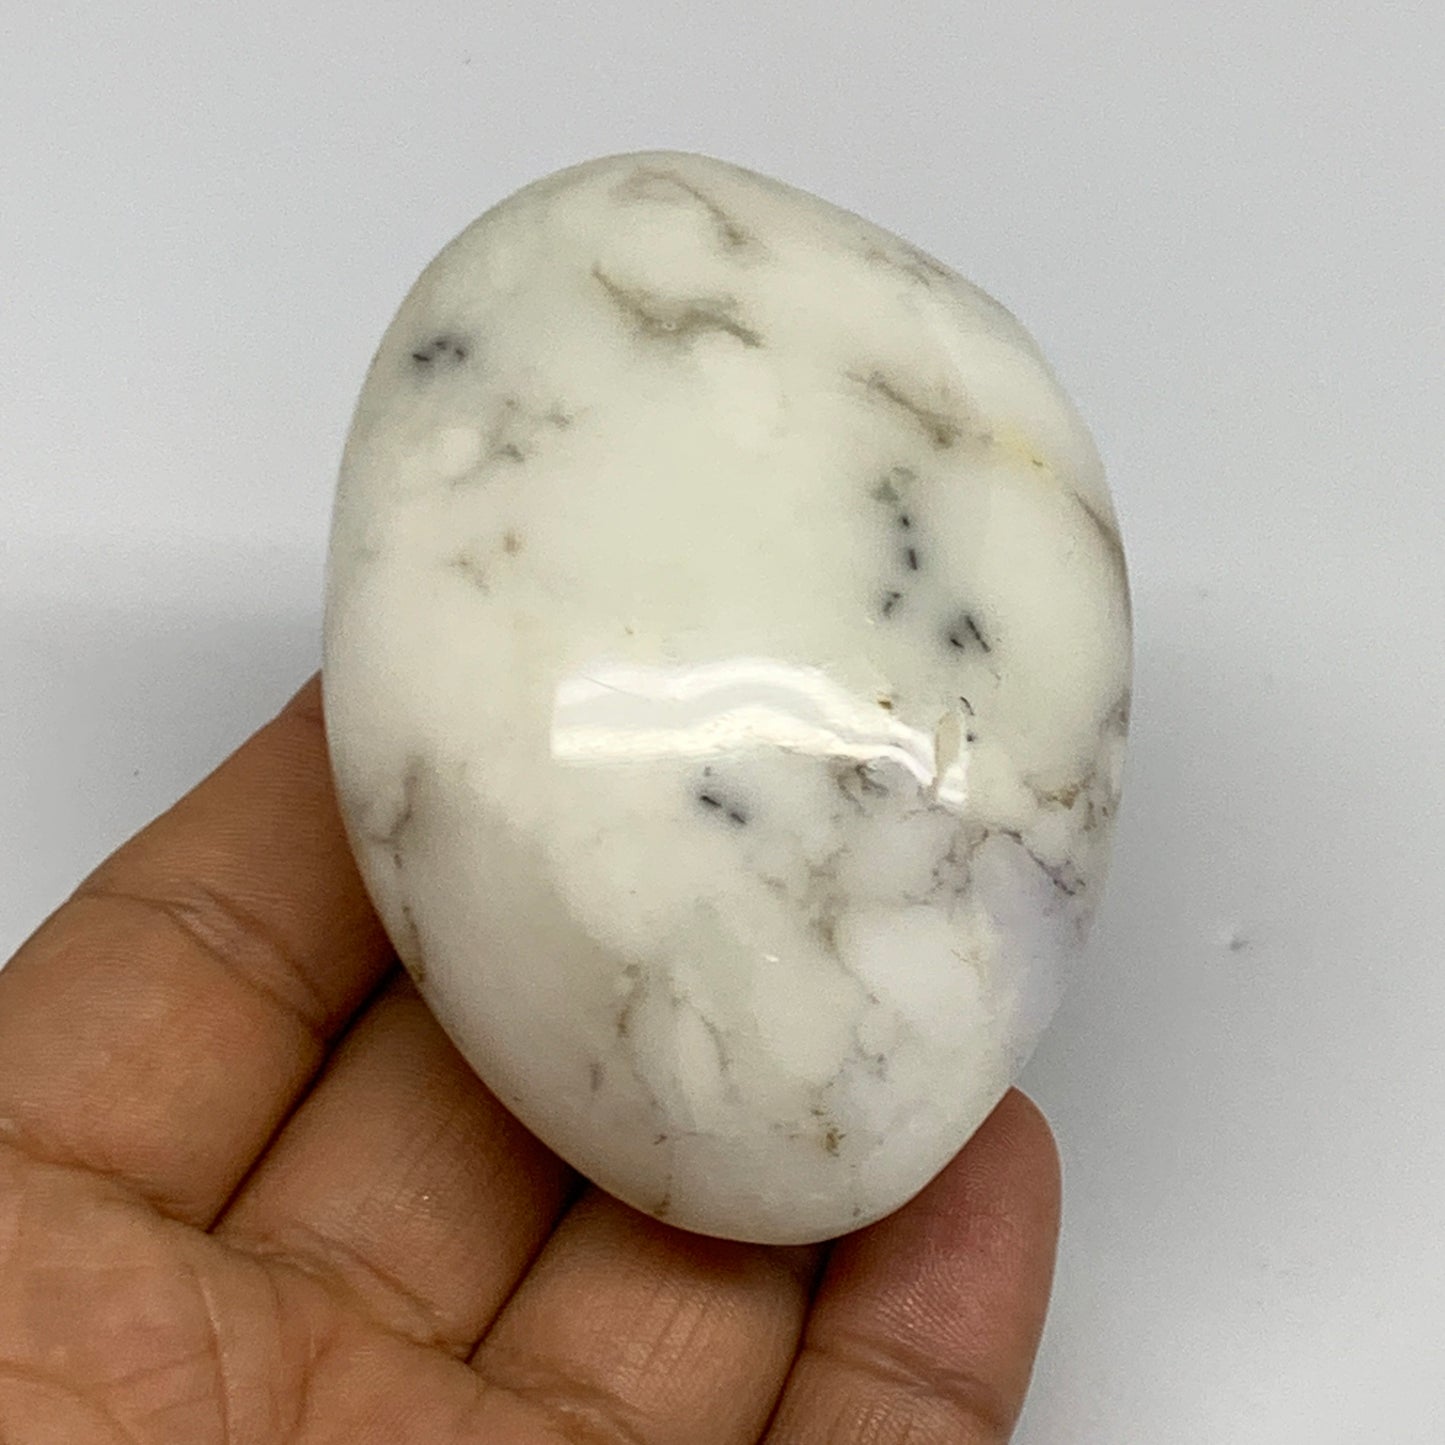 139.2g, 2.9"x2"x1.2", Dendrite Opal Palm-Stone Reiki Energy Crystal, B27818